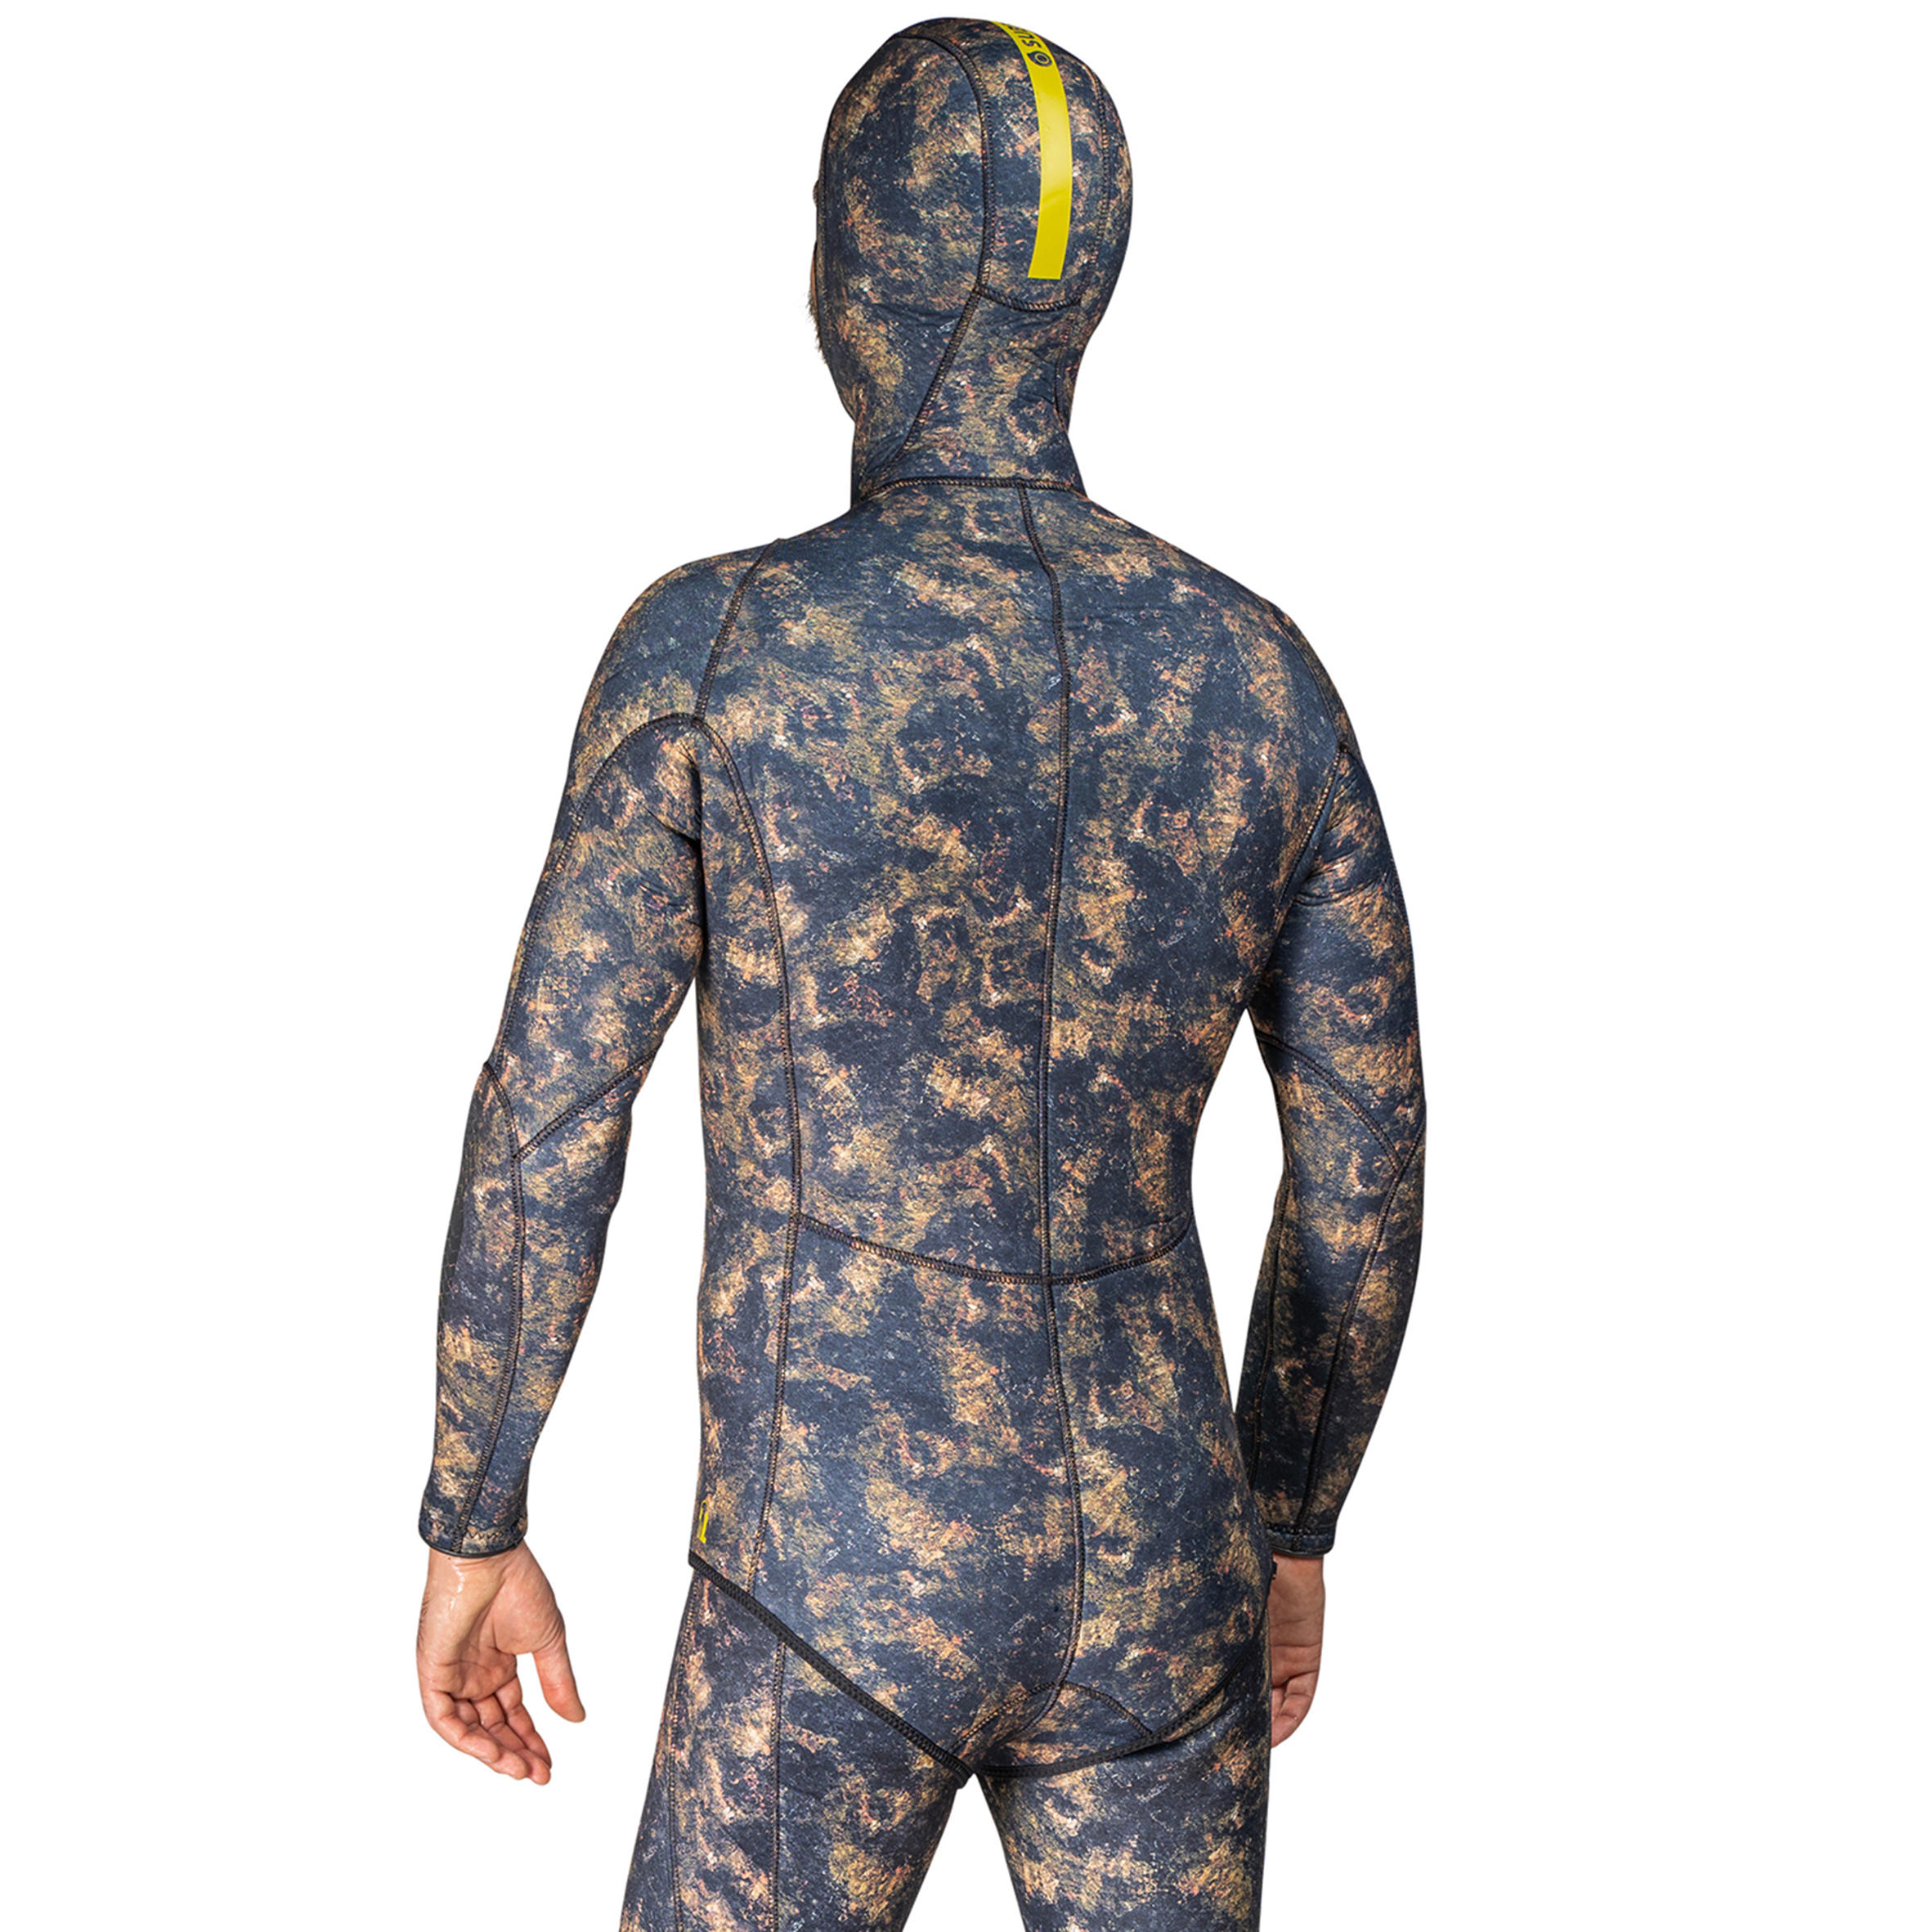 Men's spearfishing jacket 5 mm neoprene SPF 540 brown camouflage 4/7